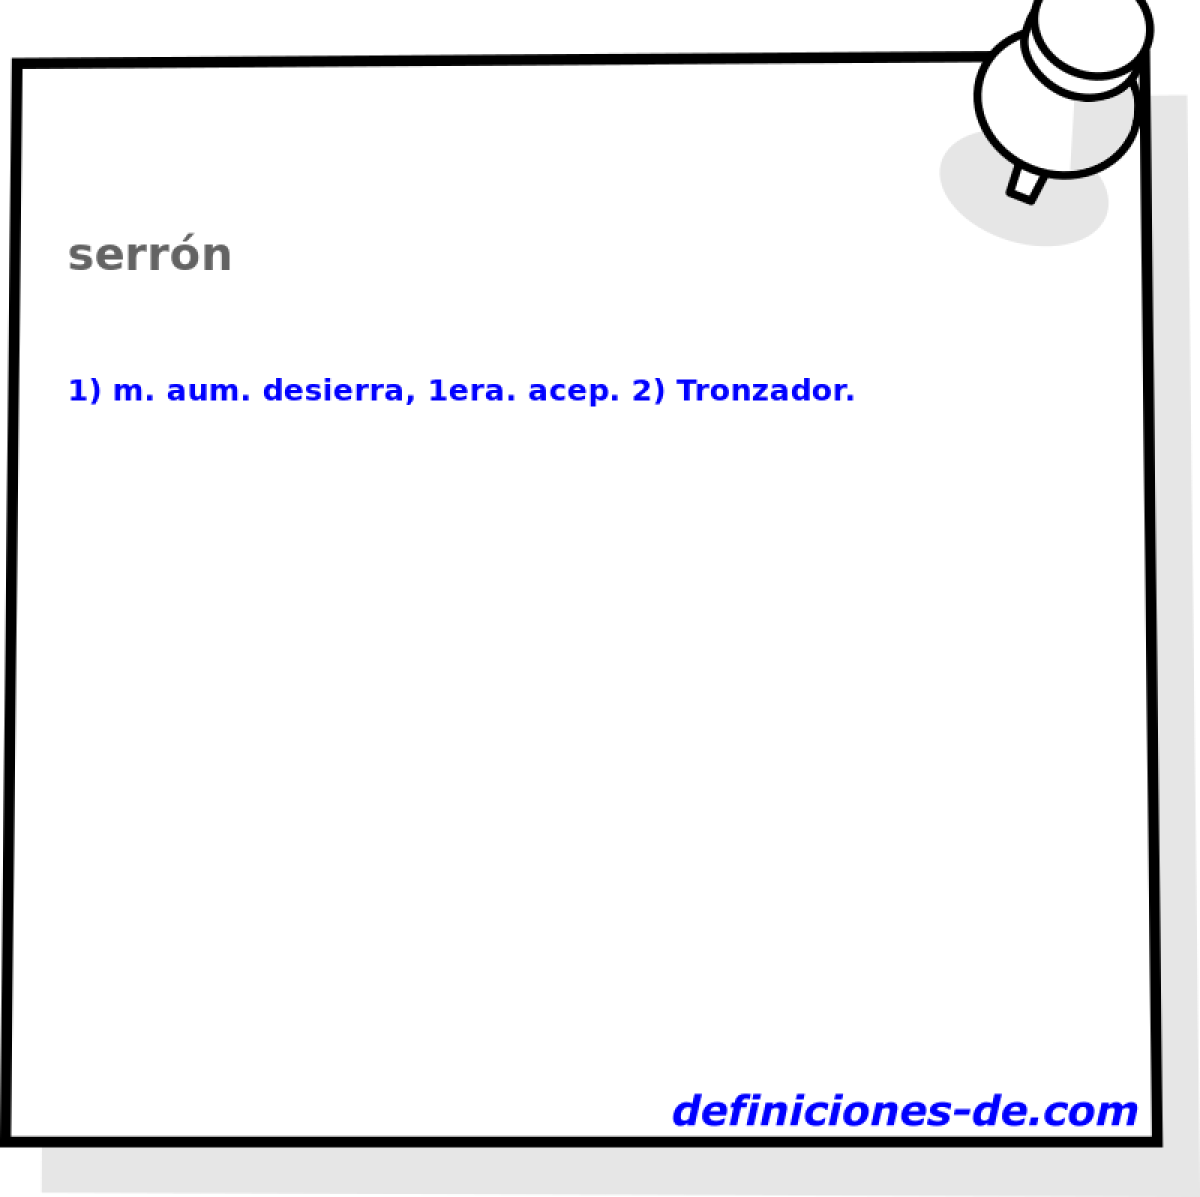 serrn 